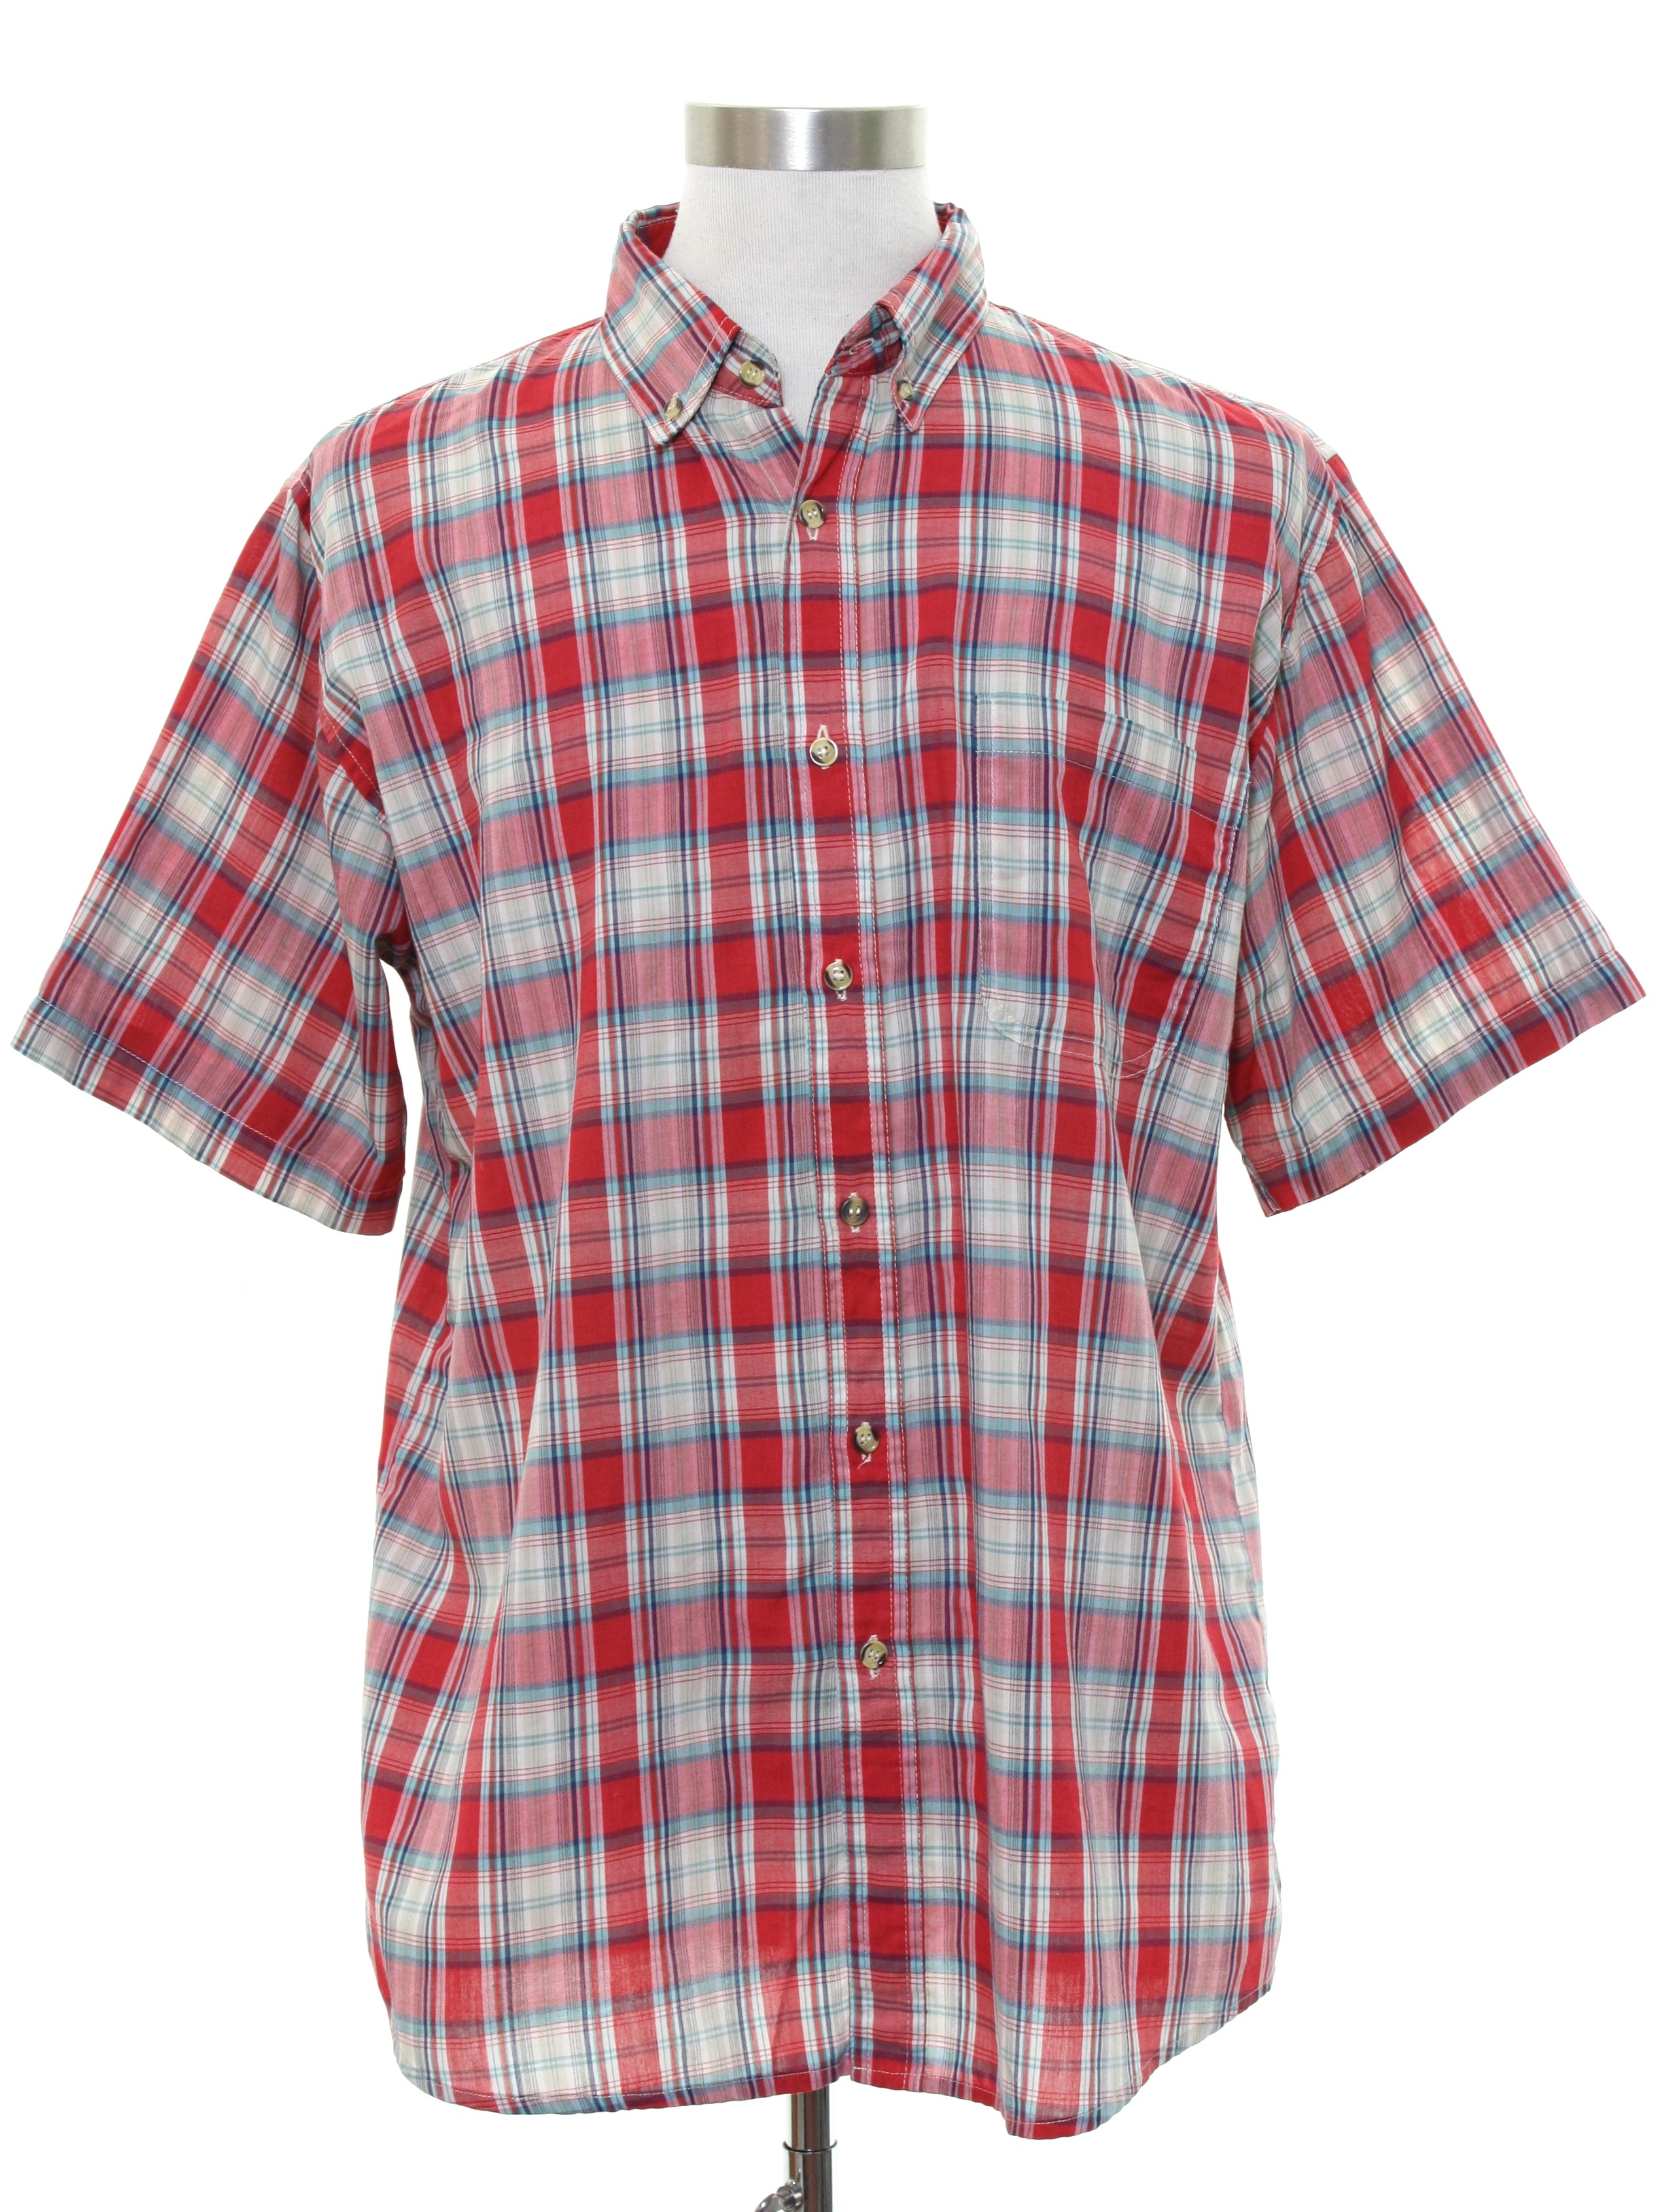 Retro 1980's Shirt (Puritan) : 80s -Puritan- Mens red background ...